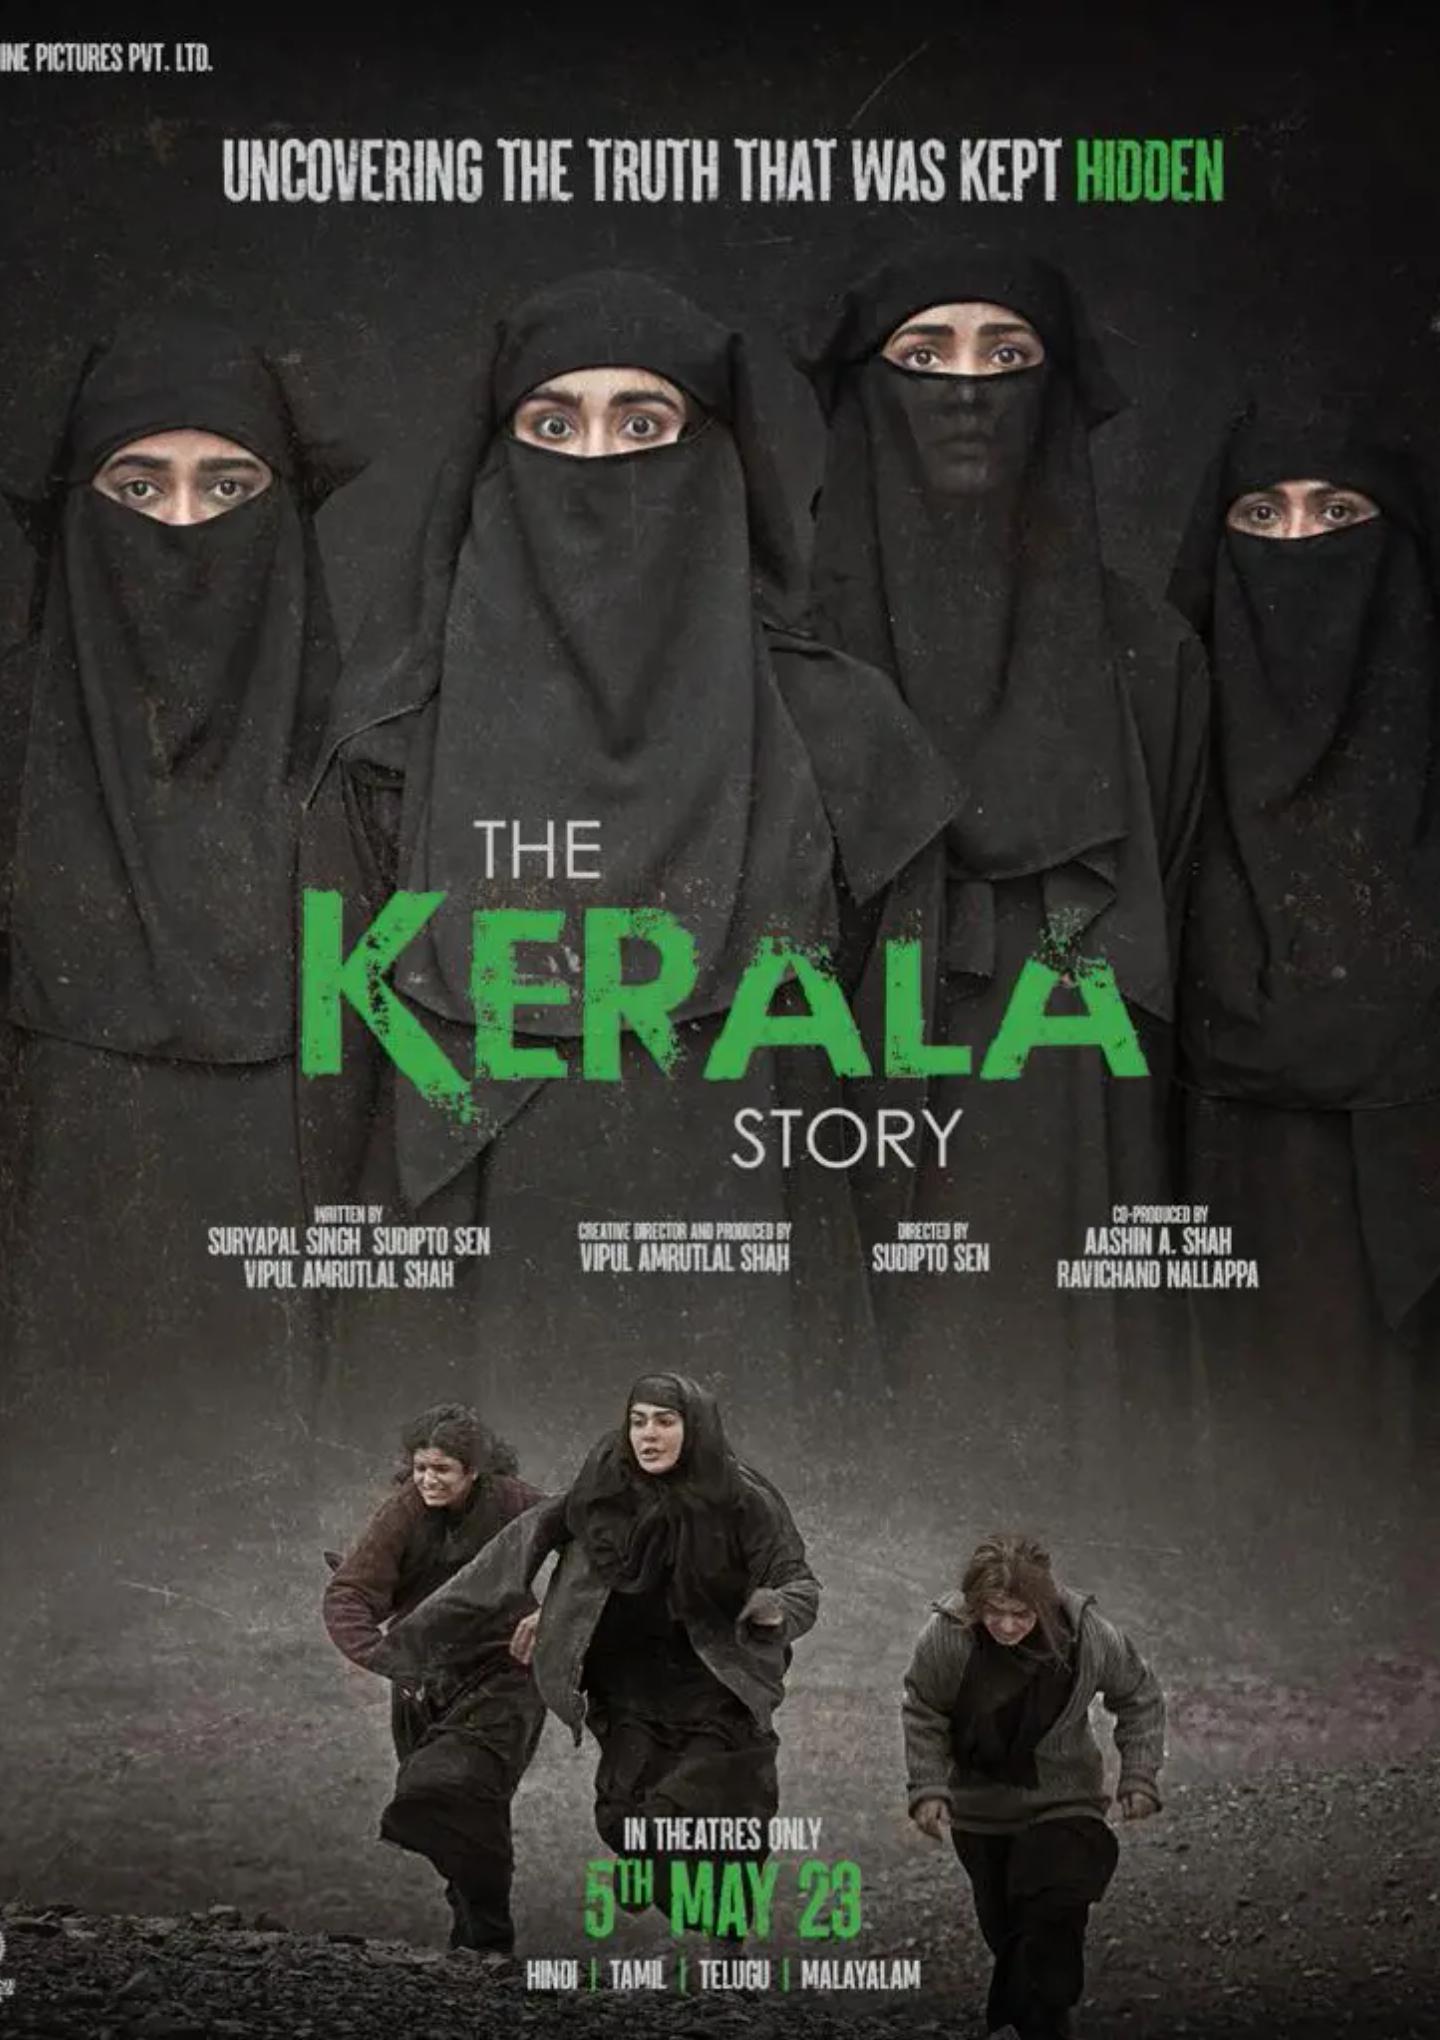 Plakat for 'The Kerela Story - Hindi'